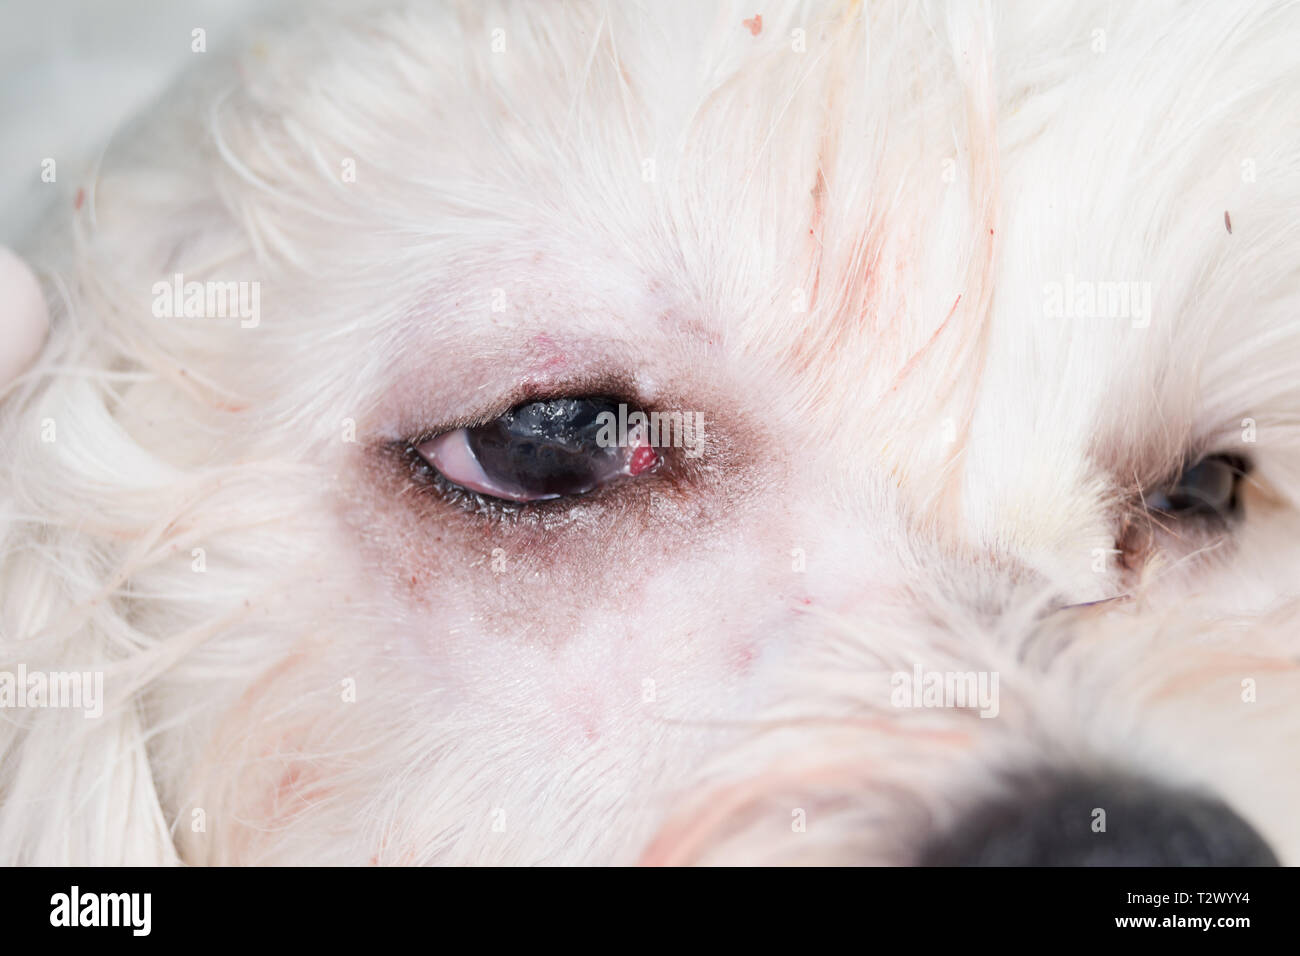 eye of a dog after cherry eye surgery Stock Photo - Alamy